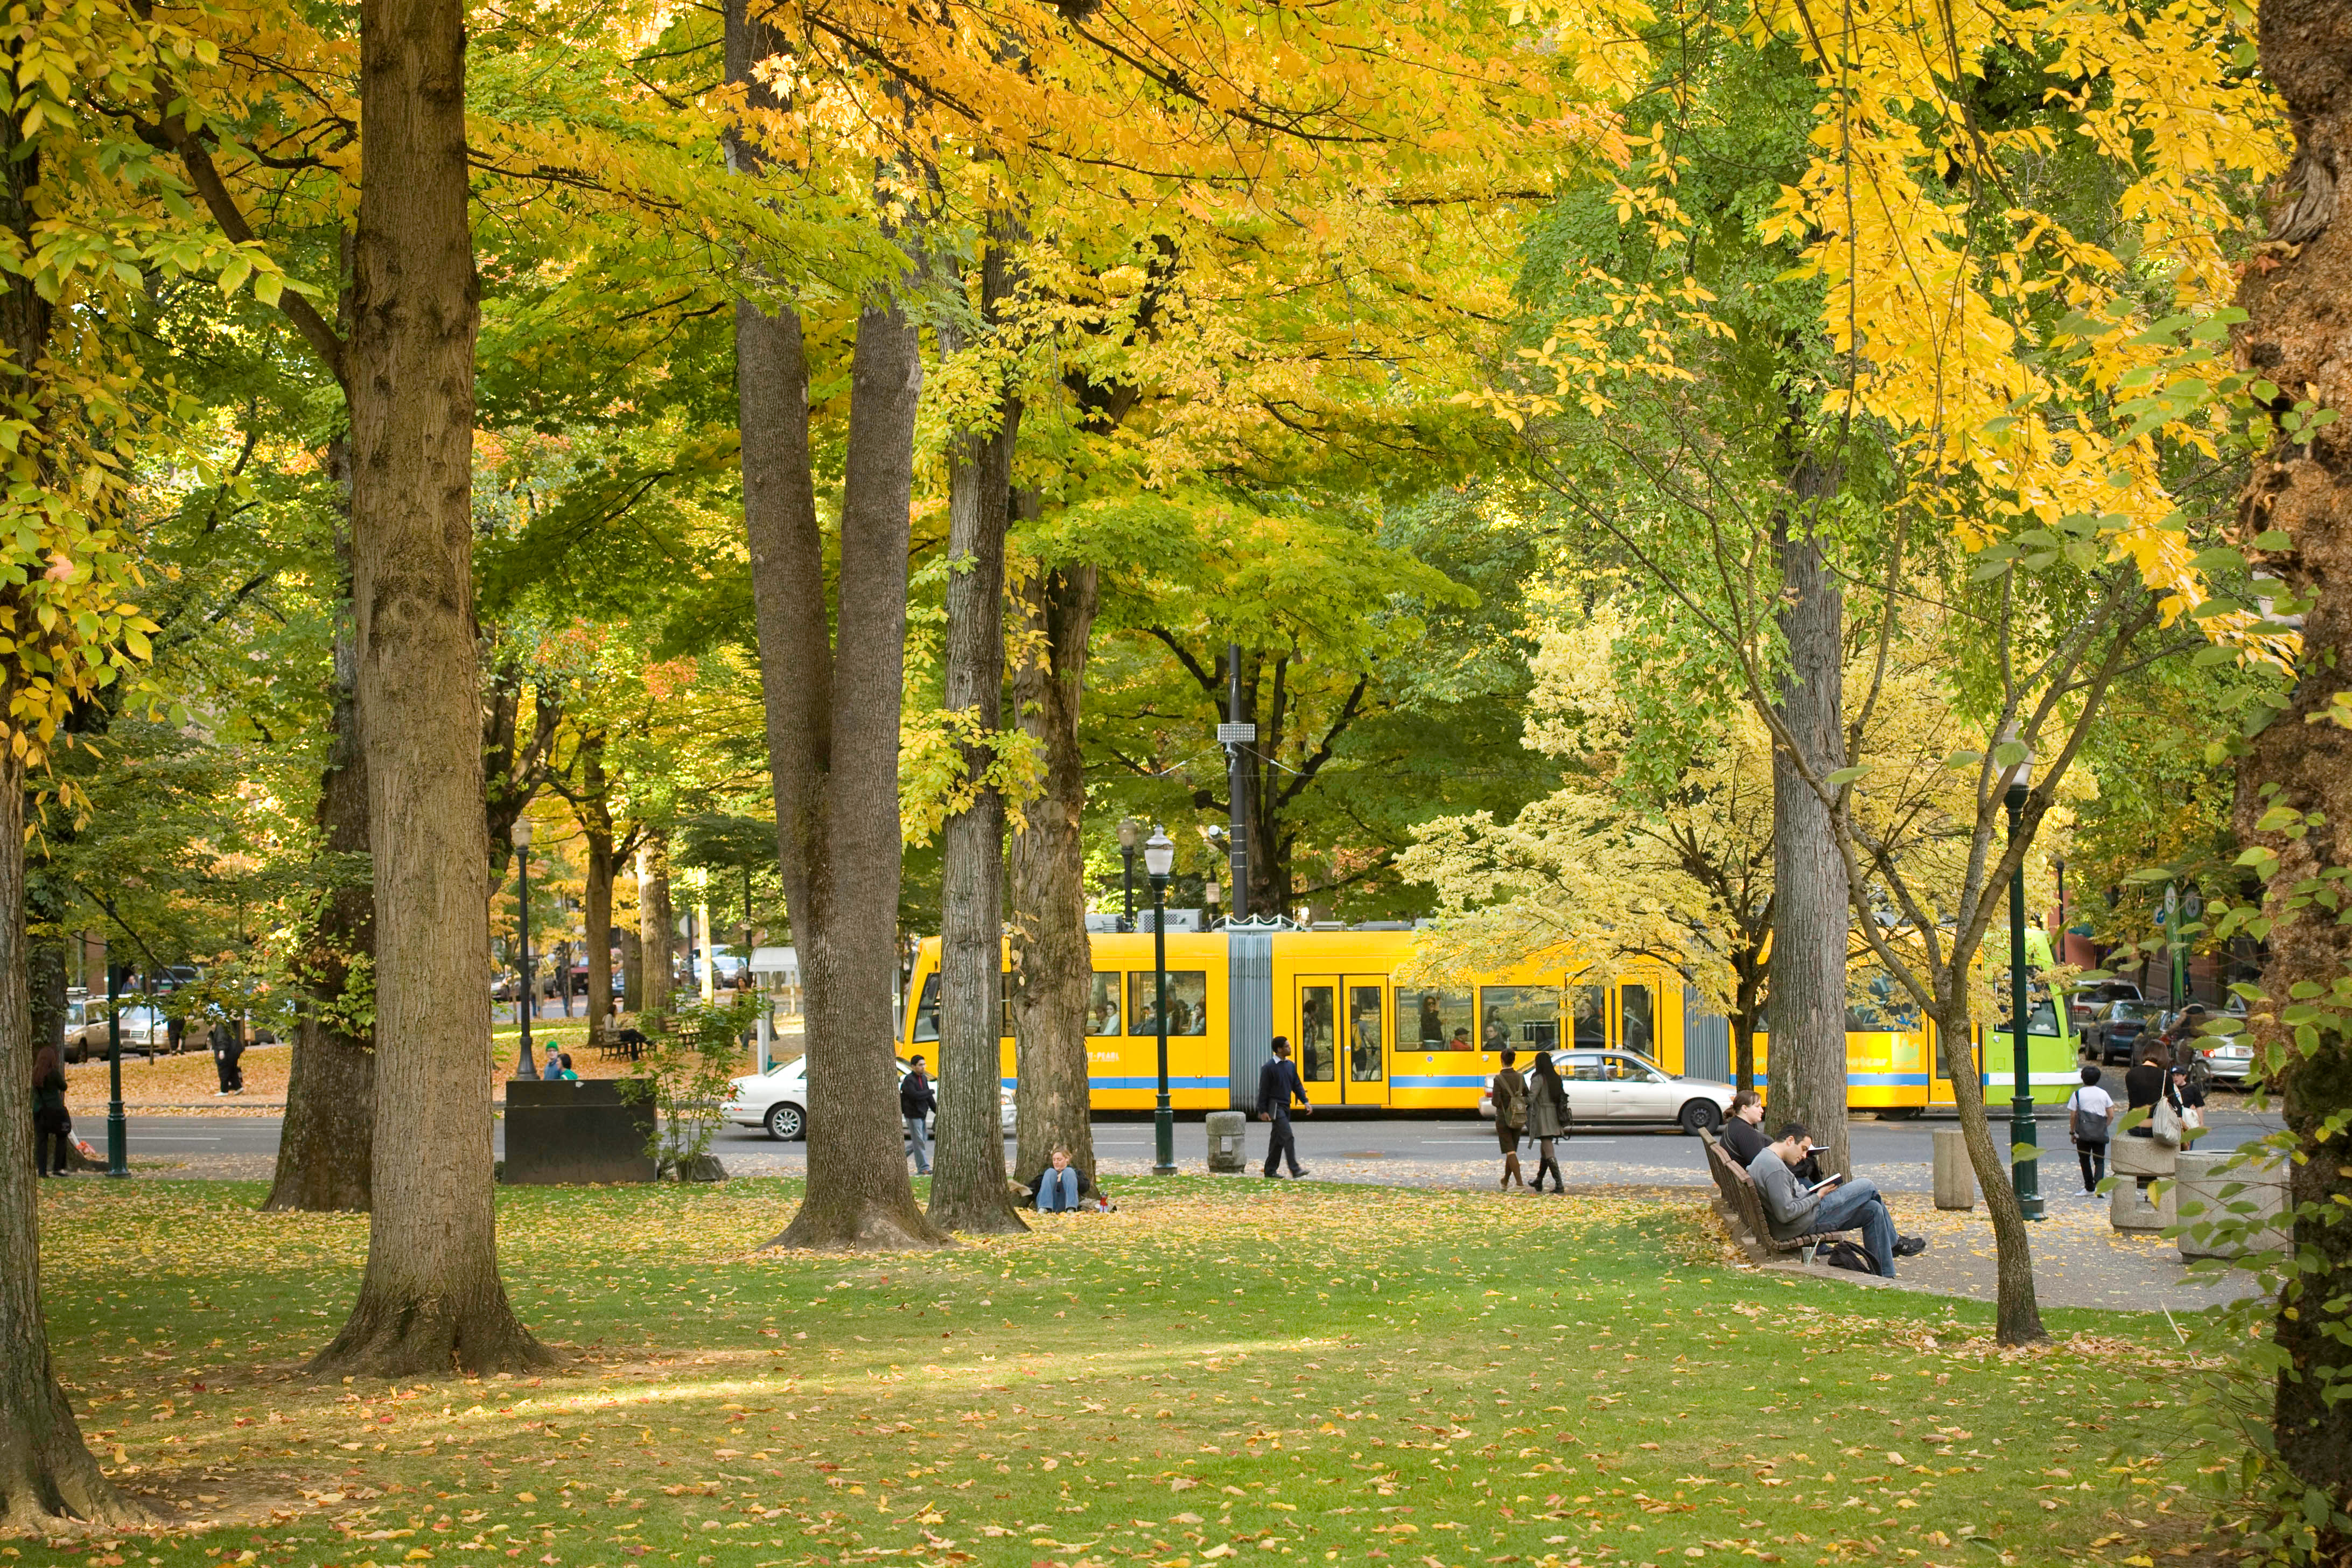 A yellow streetcar moves through the park blocks